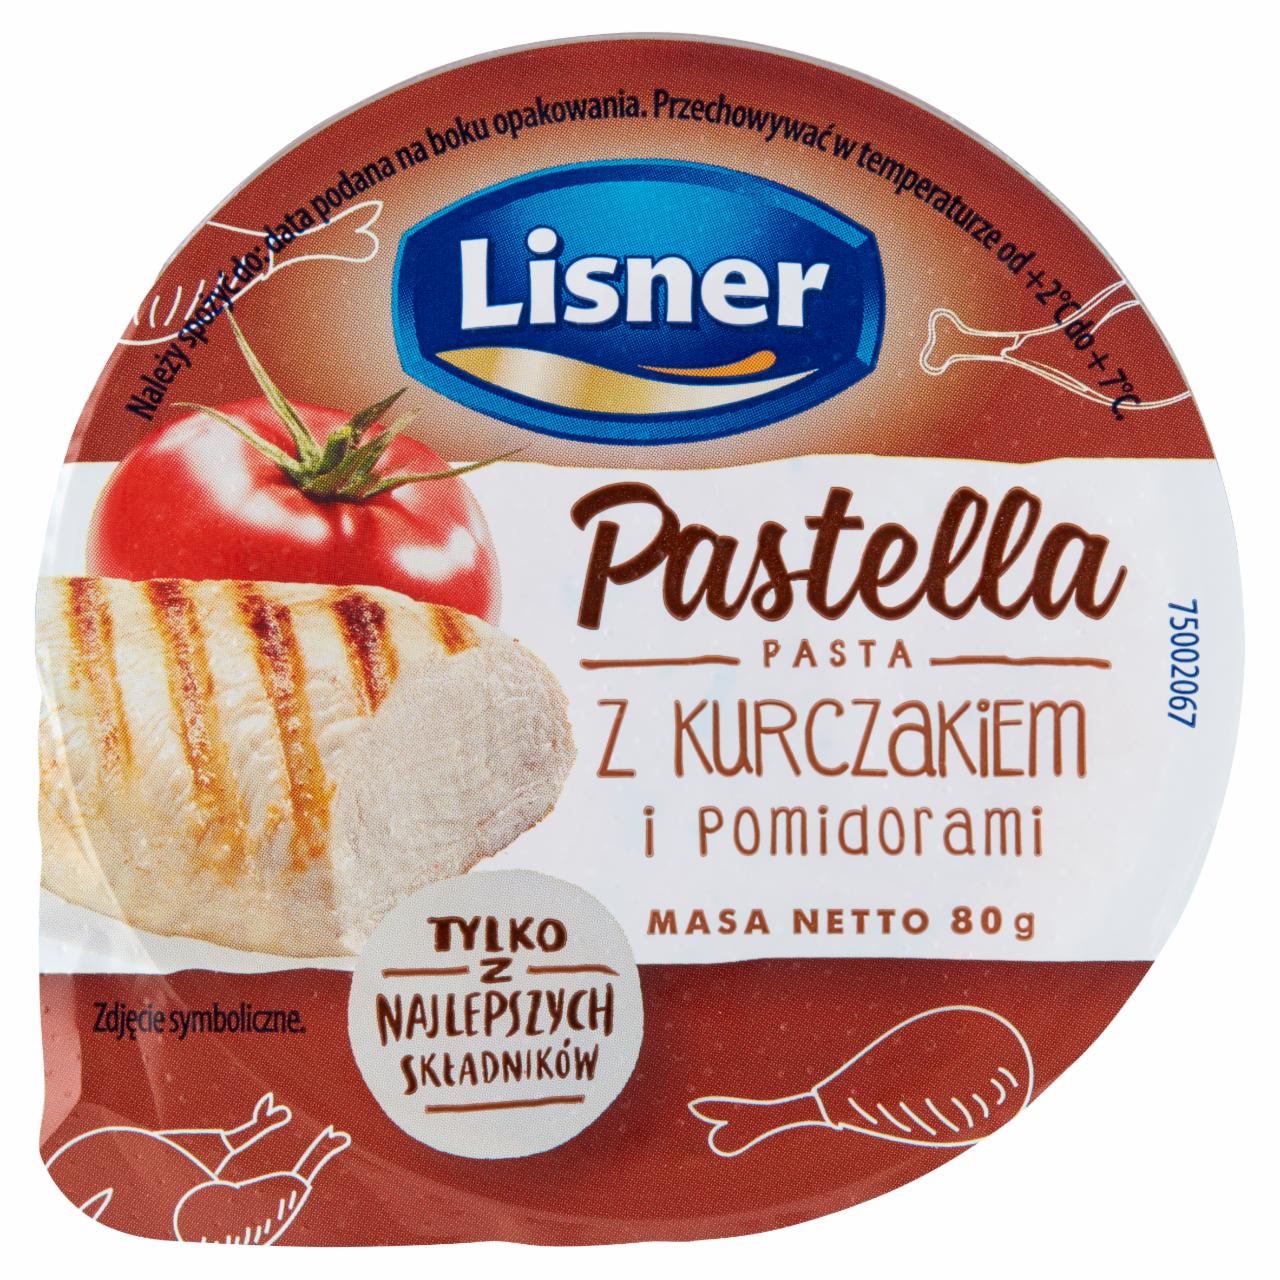 Zdjęcia - Lisner Pastella Pasta z kurczakiem i pomidorami 80 g